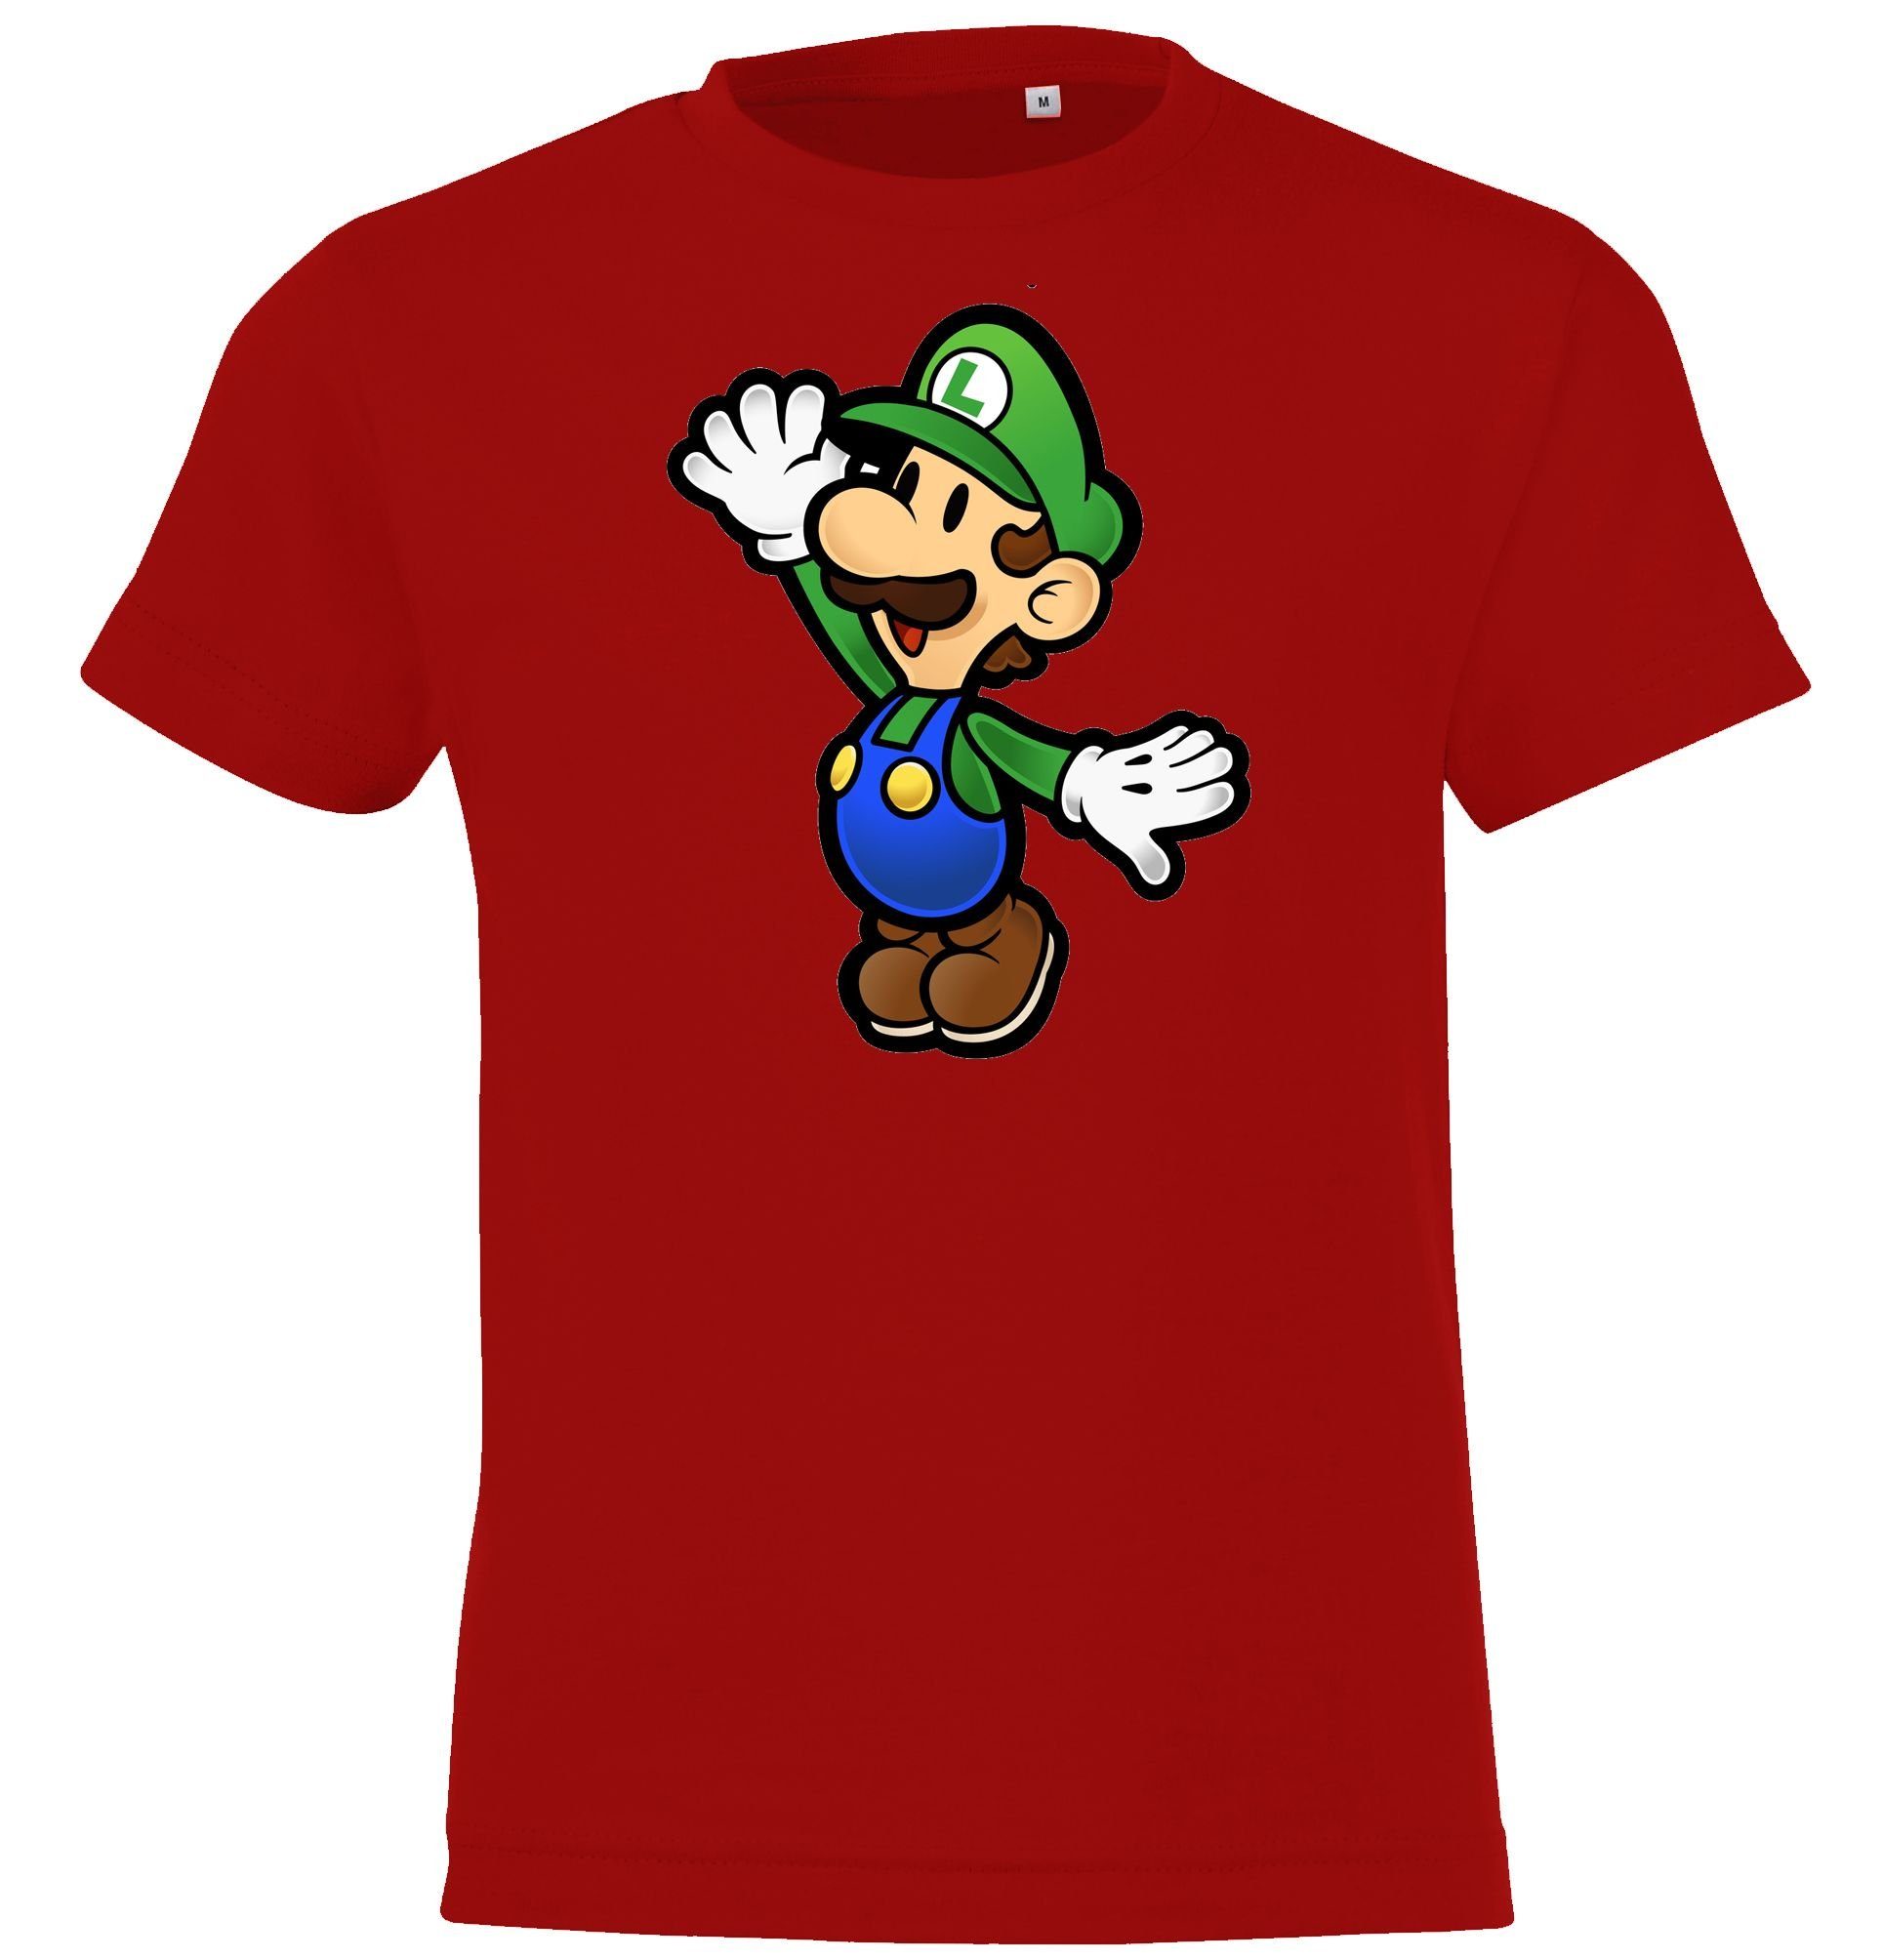 Youth Designz T-Shirt Kinder T-Shirt Print Rot Modell Luigi trendigem Mit Front